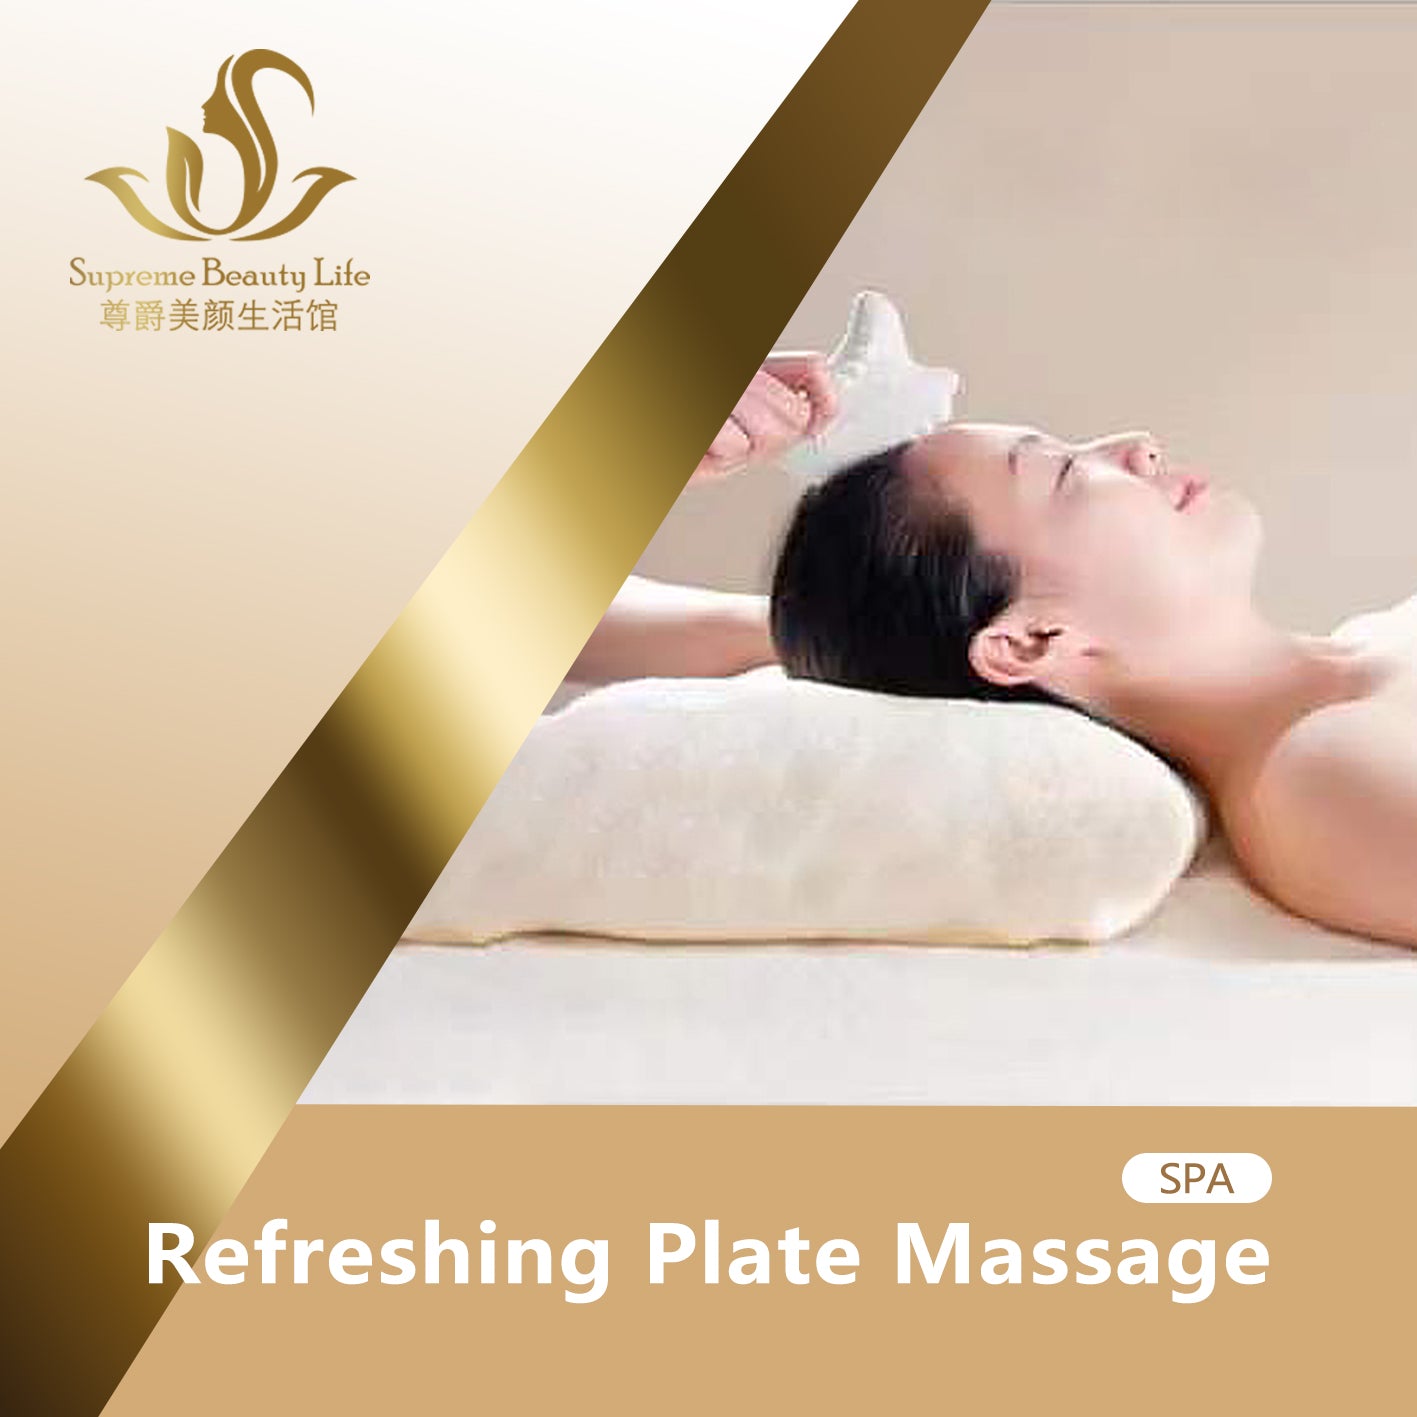 Refreshing Plate Massage